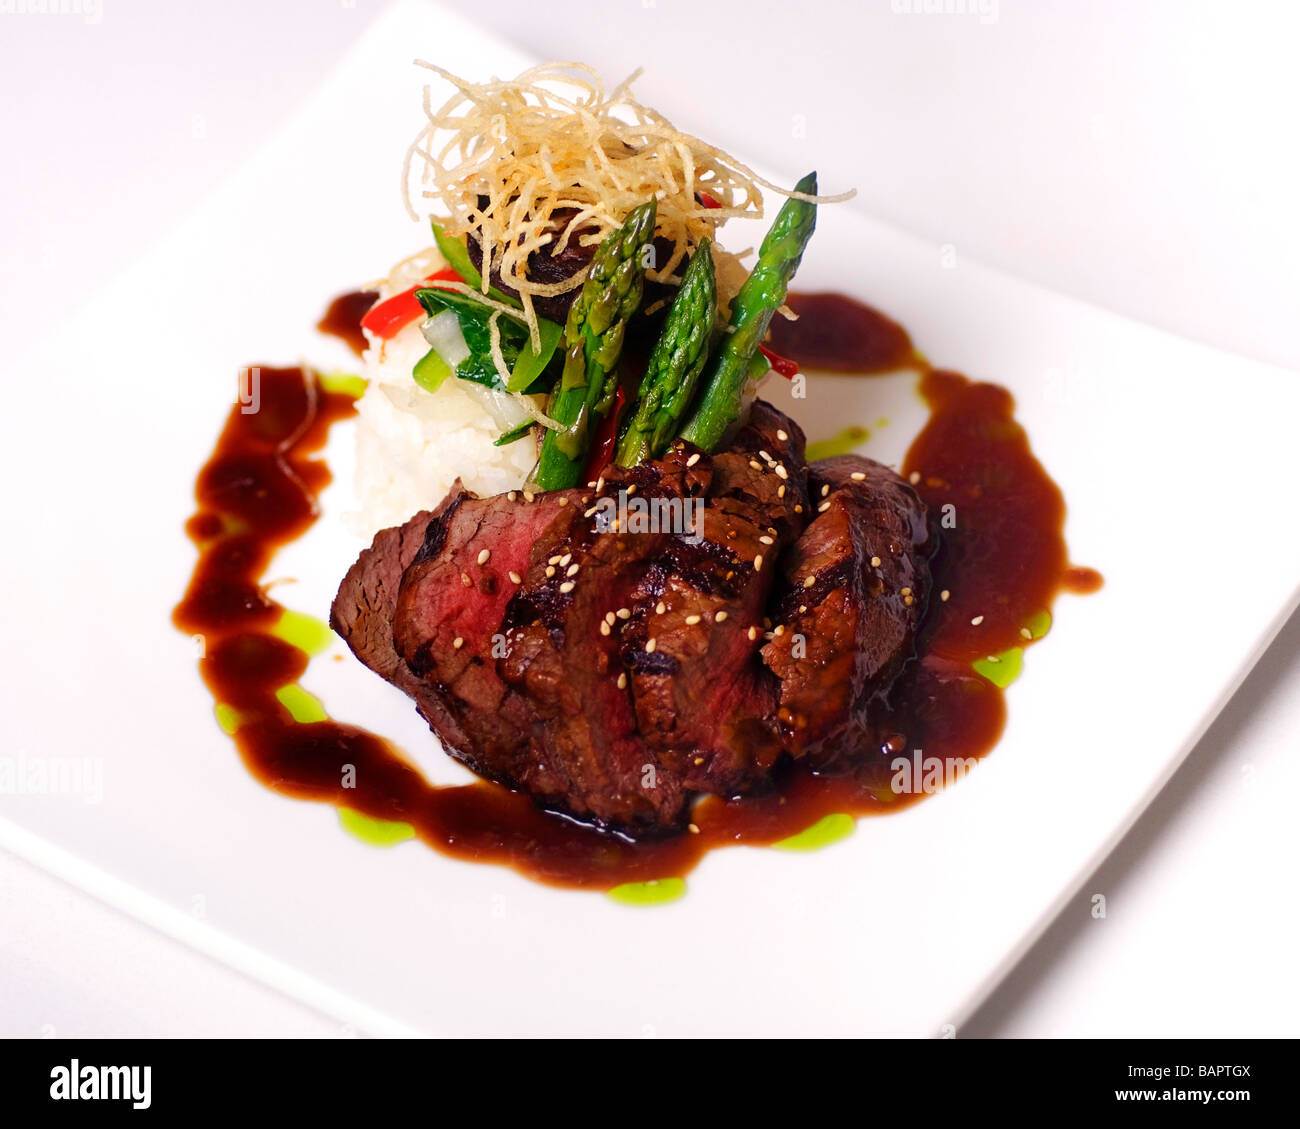 A gourmet fillet mignon steak at five star restaurant. Stock Photo